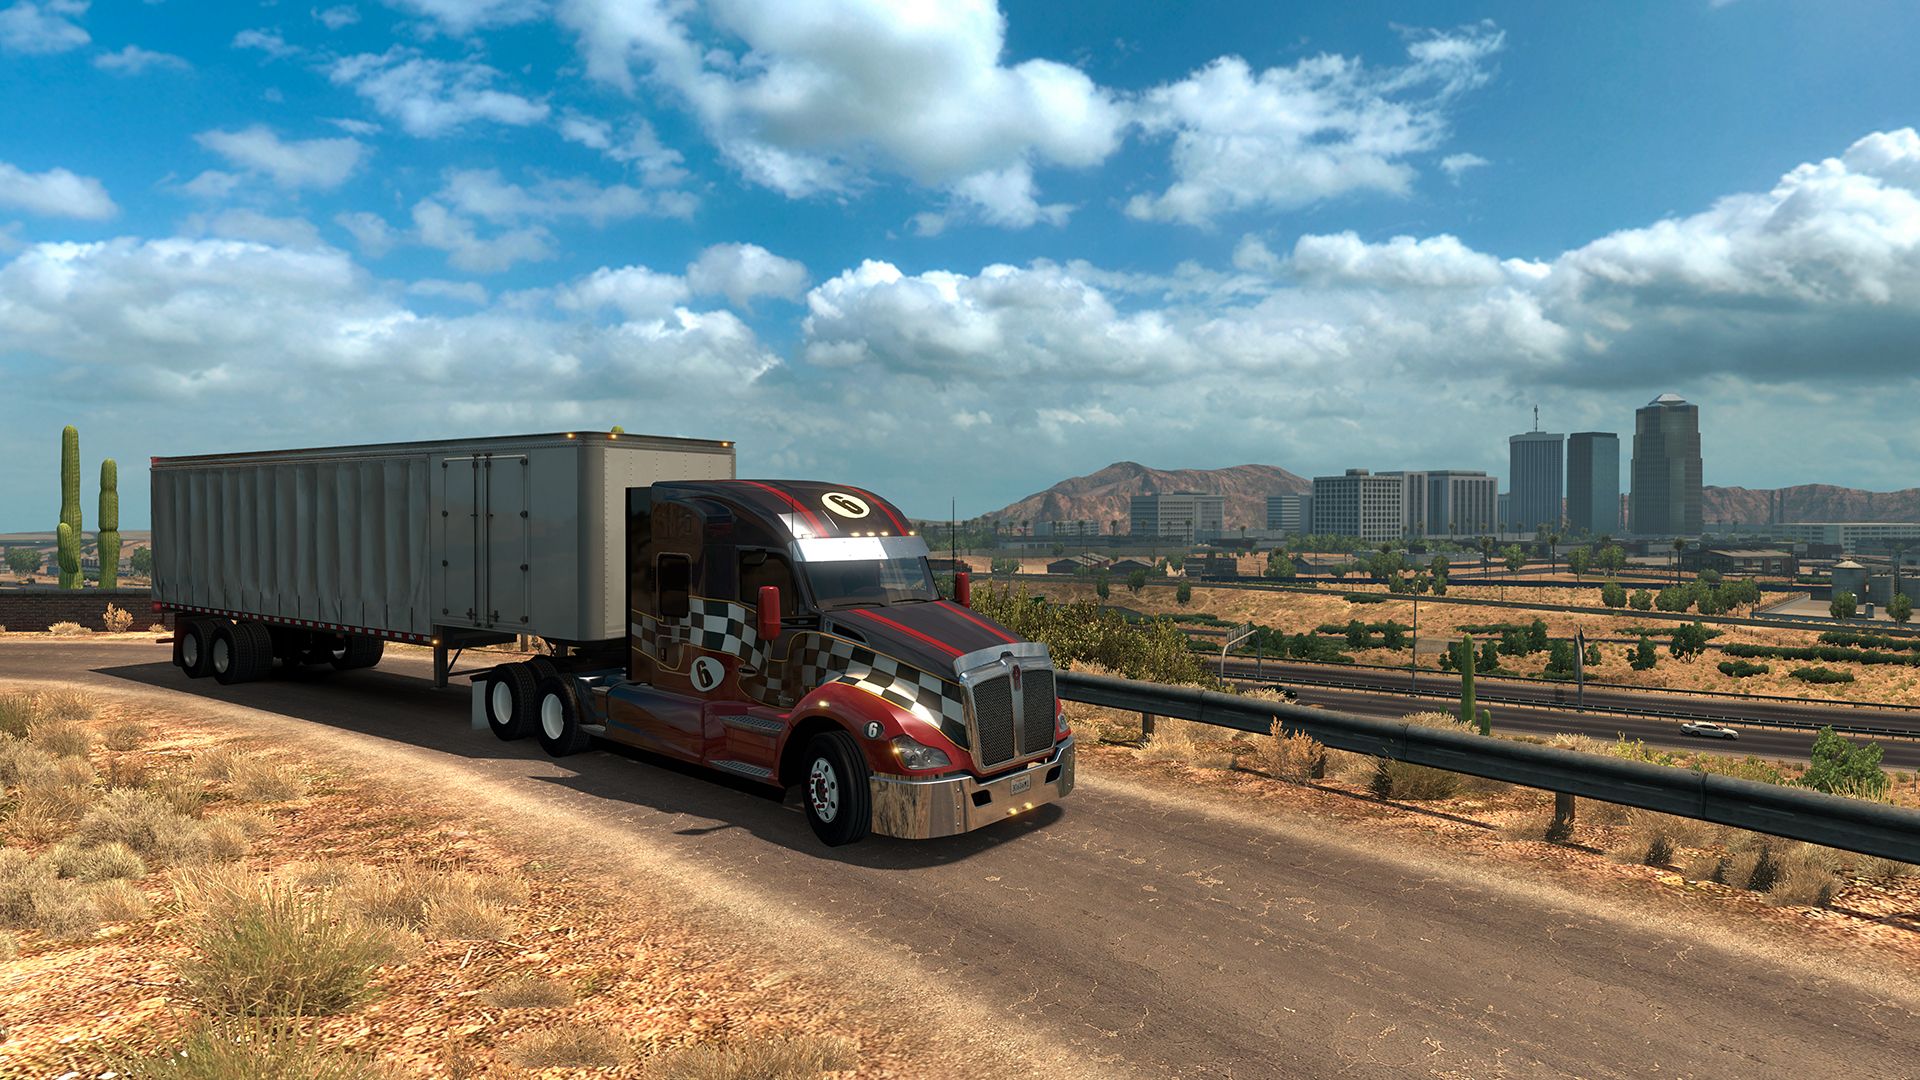 American Truck Simulator Arizona